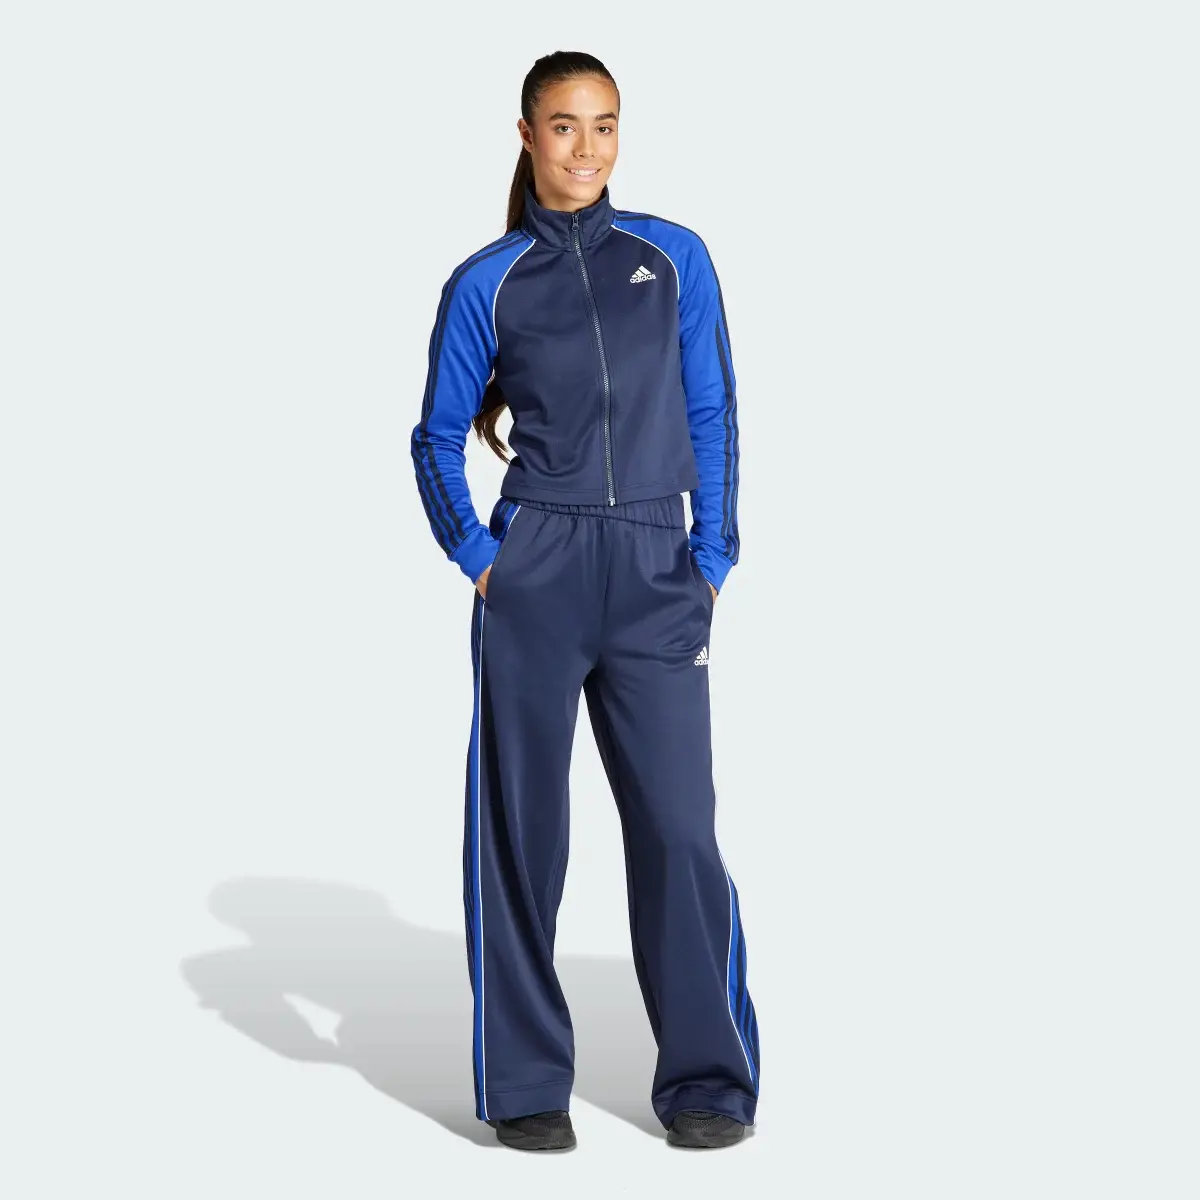 Adidas Teamsport Track Suit. 2